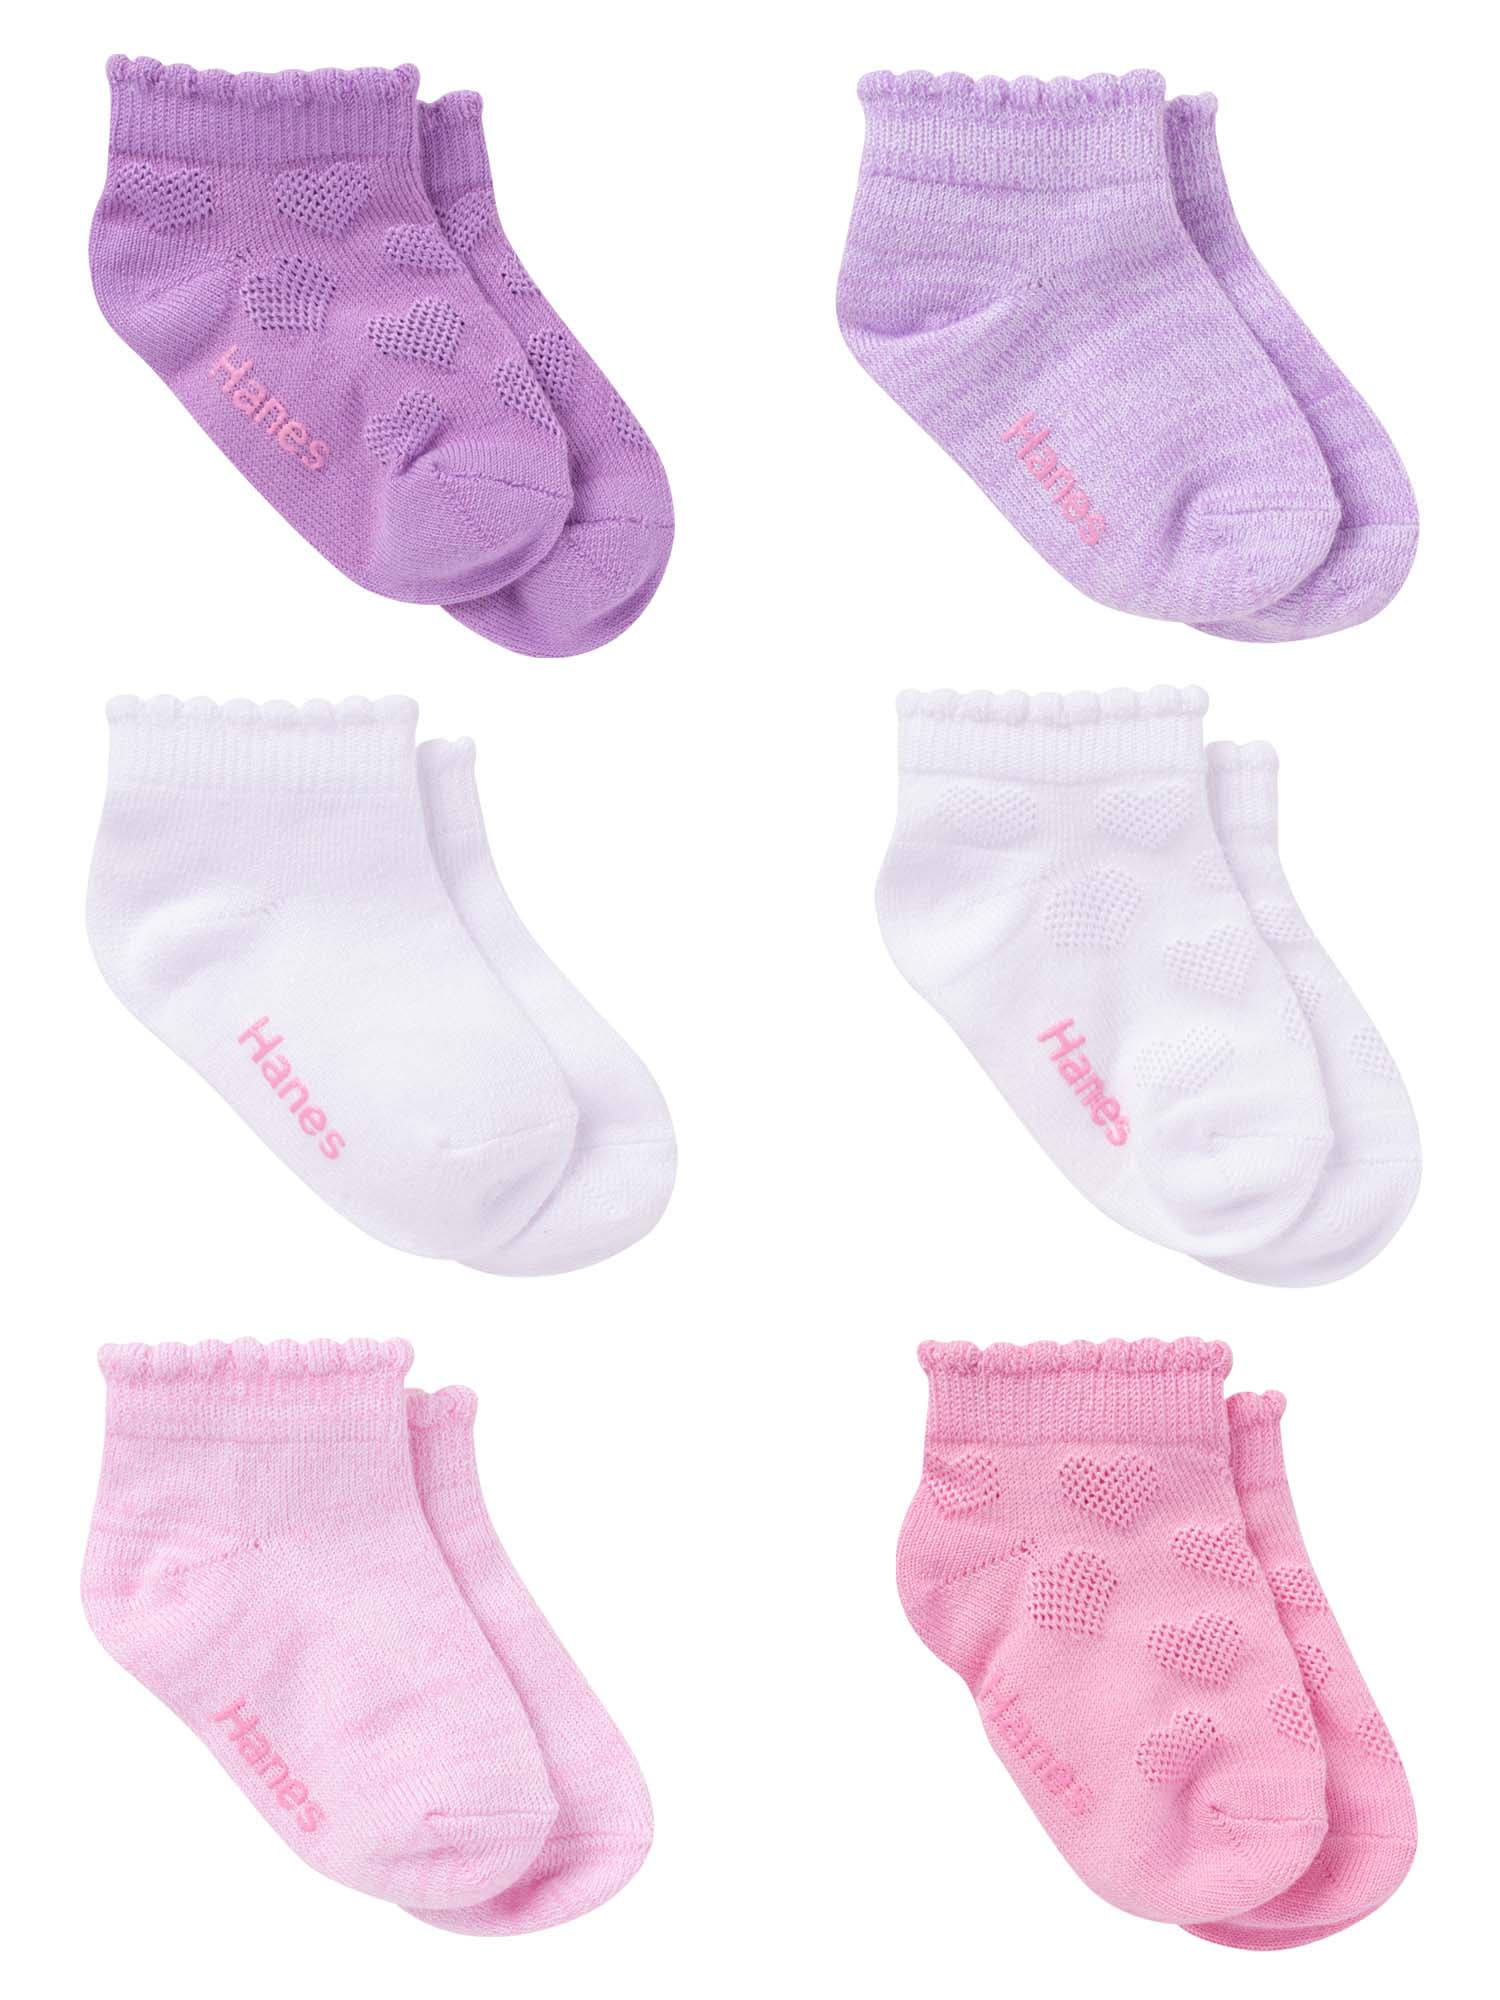 Hanes Toddler Girl Low Cut Socks, 6 Pack, Sizes 6M-5T